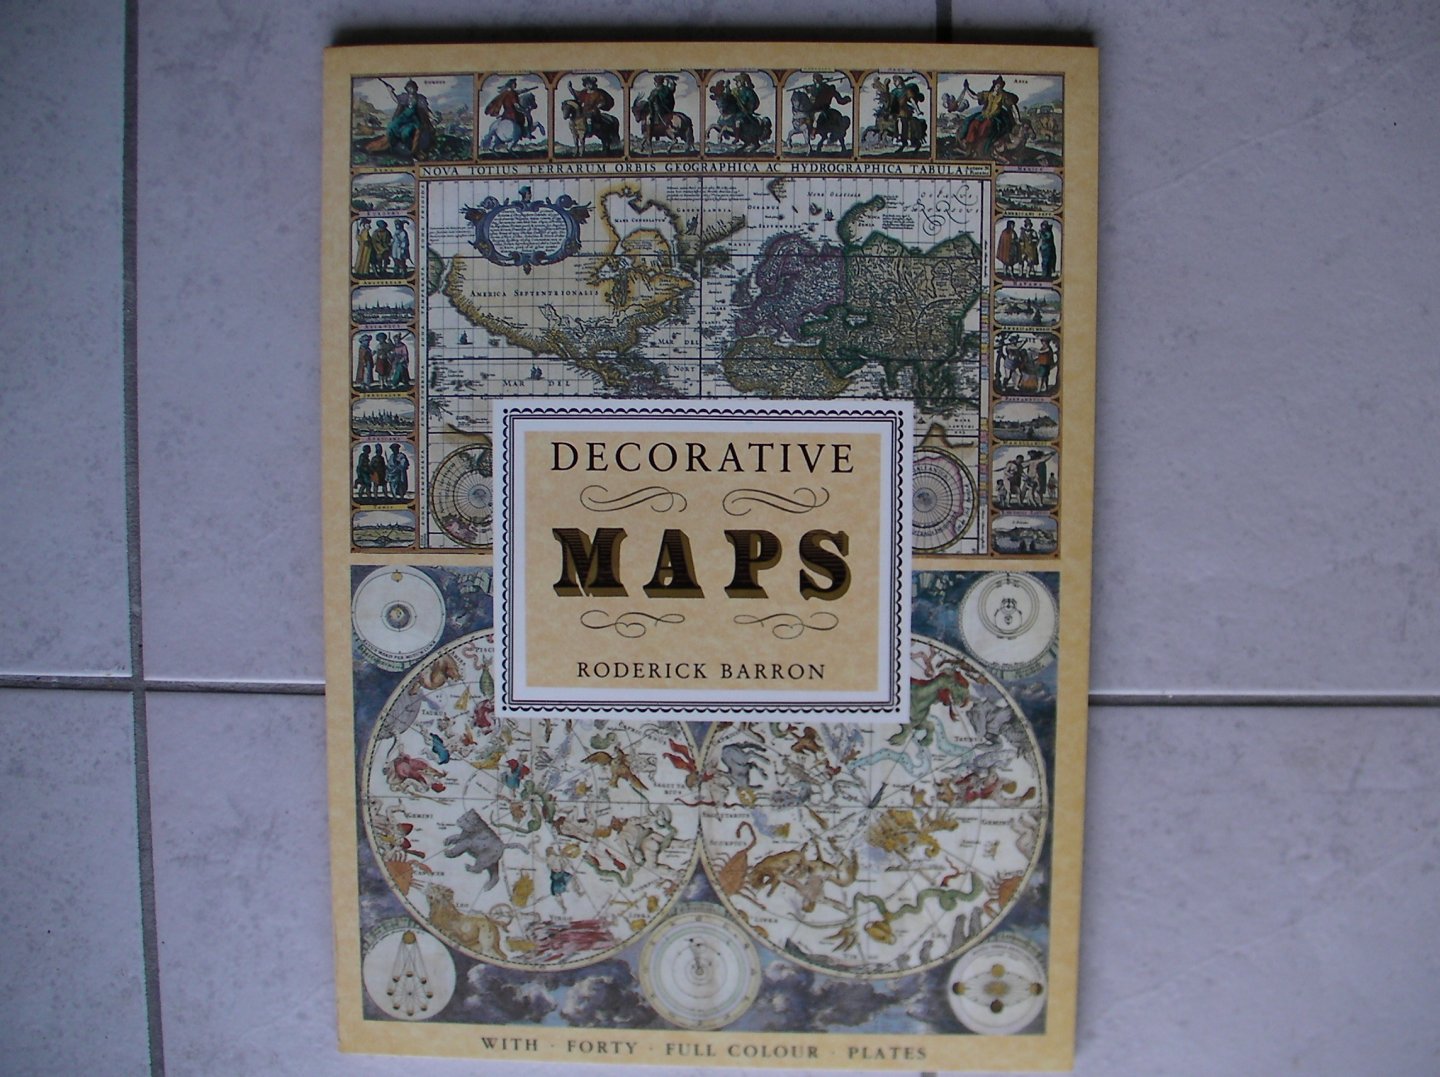 Roderick barron - Decorative Maps